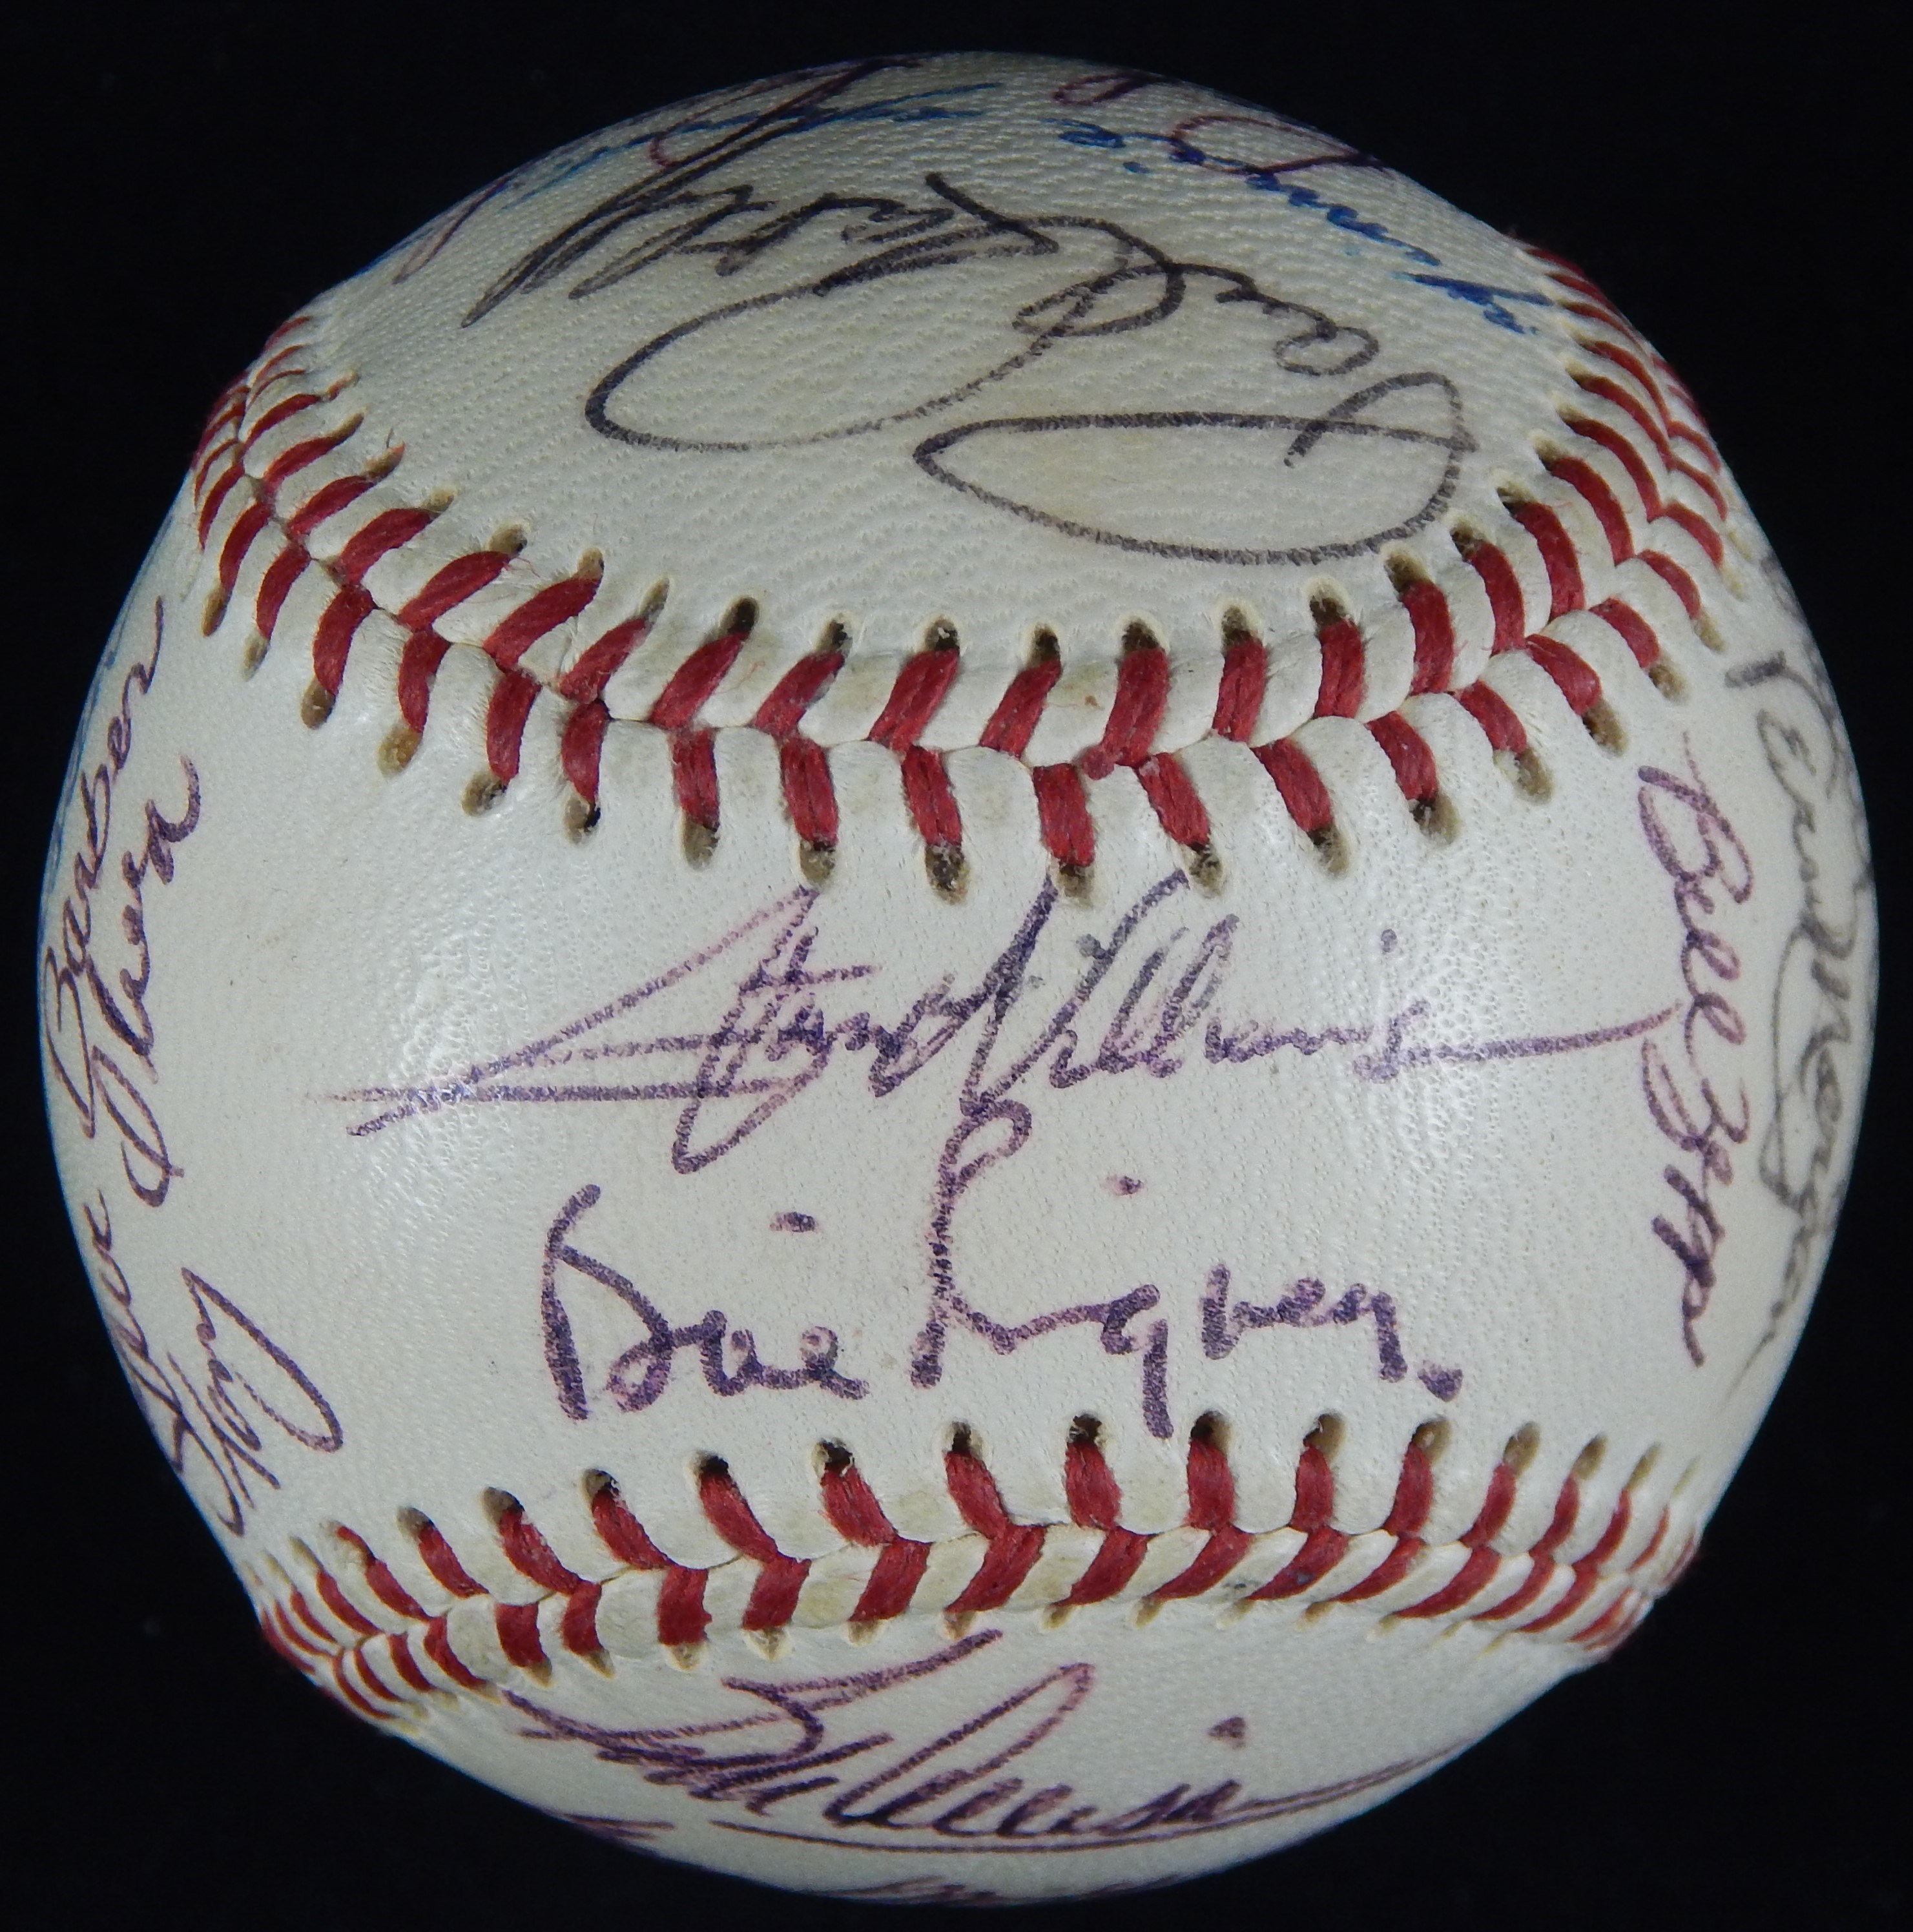 Team Baseballs - 1970 Minnesota Twins Team Signed Baseball with 31 Signatures - PSA/DNA